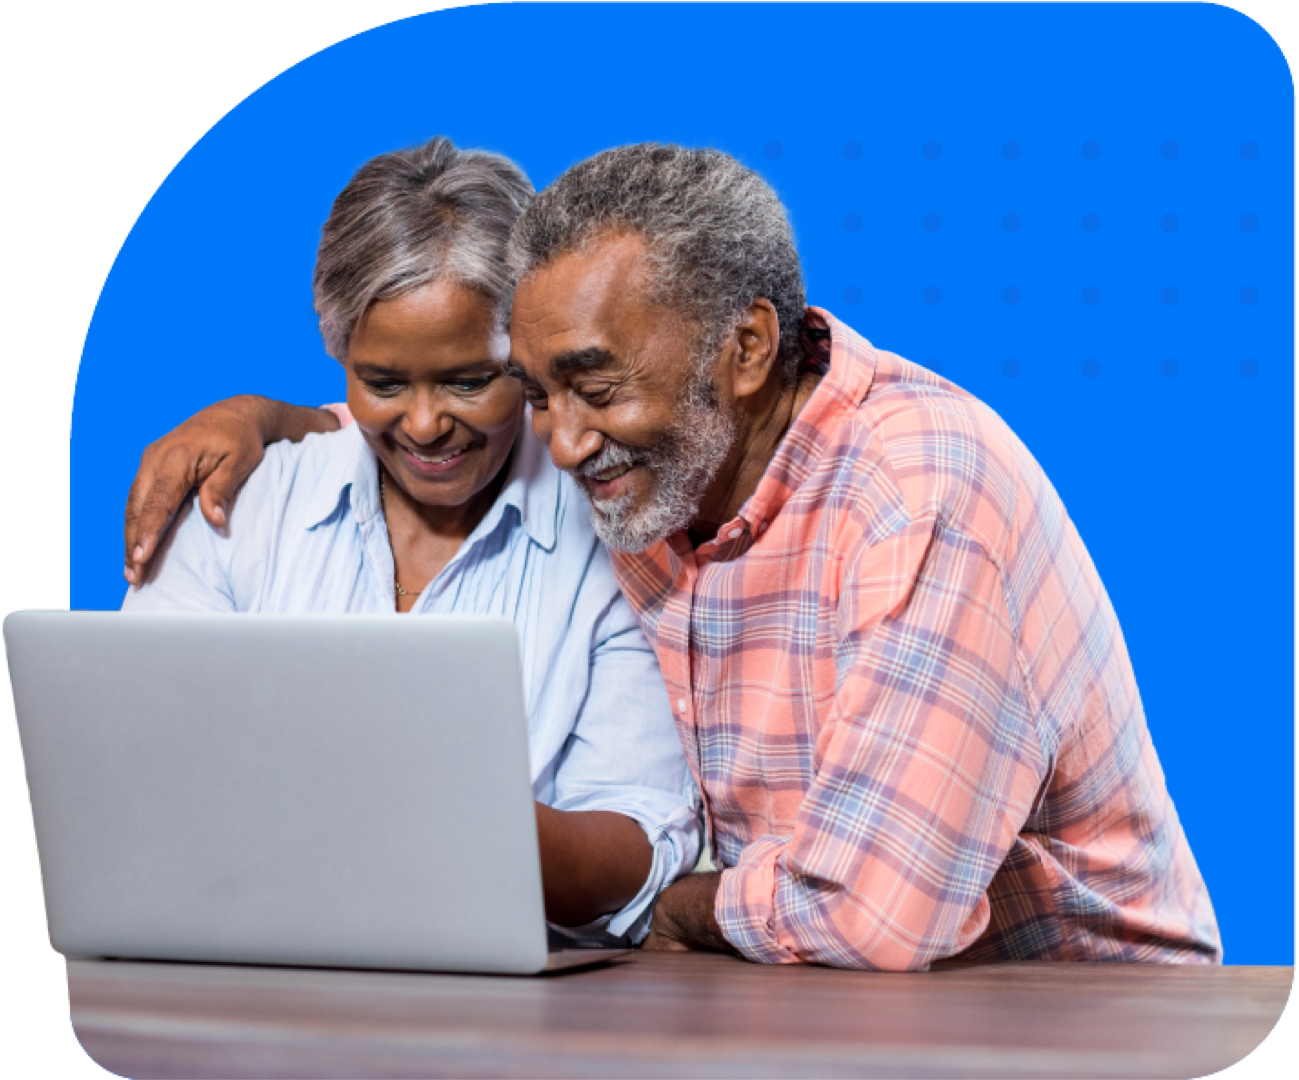 Smiling senior couple looking down at laptop